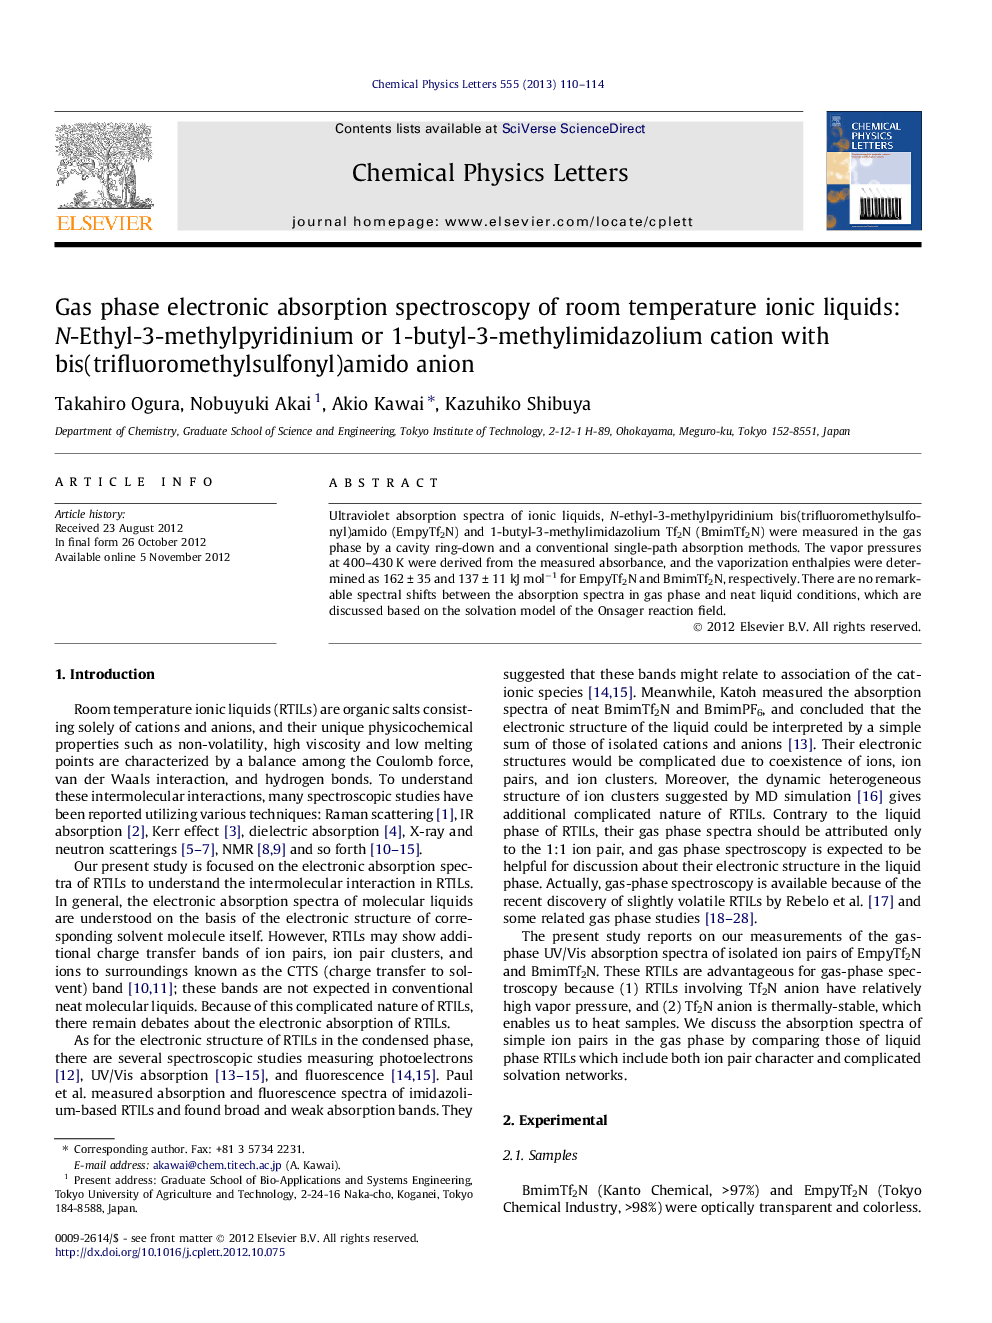 Gas phase electronic absorption spectroscopy of room temperature ionic liquids: N-Ethyl-3-methylpyridinium or 1-butyl-3-methylimidazolium cation with bis(trifluoromethylsulfonyl)amido anion